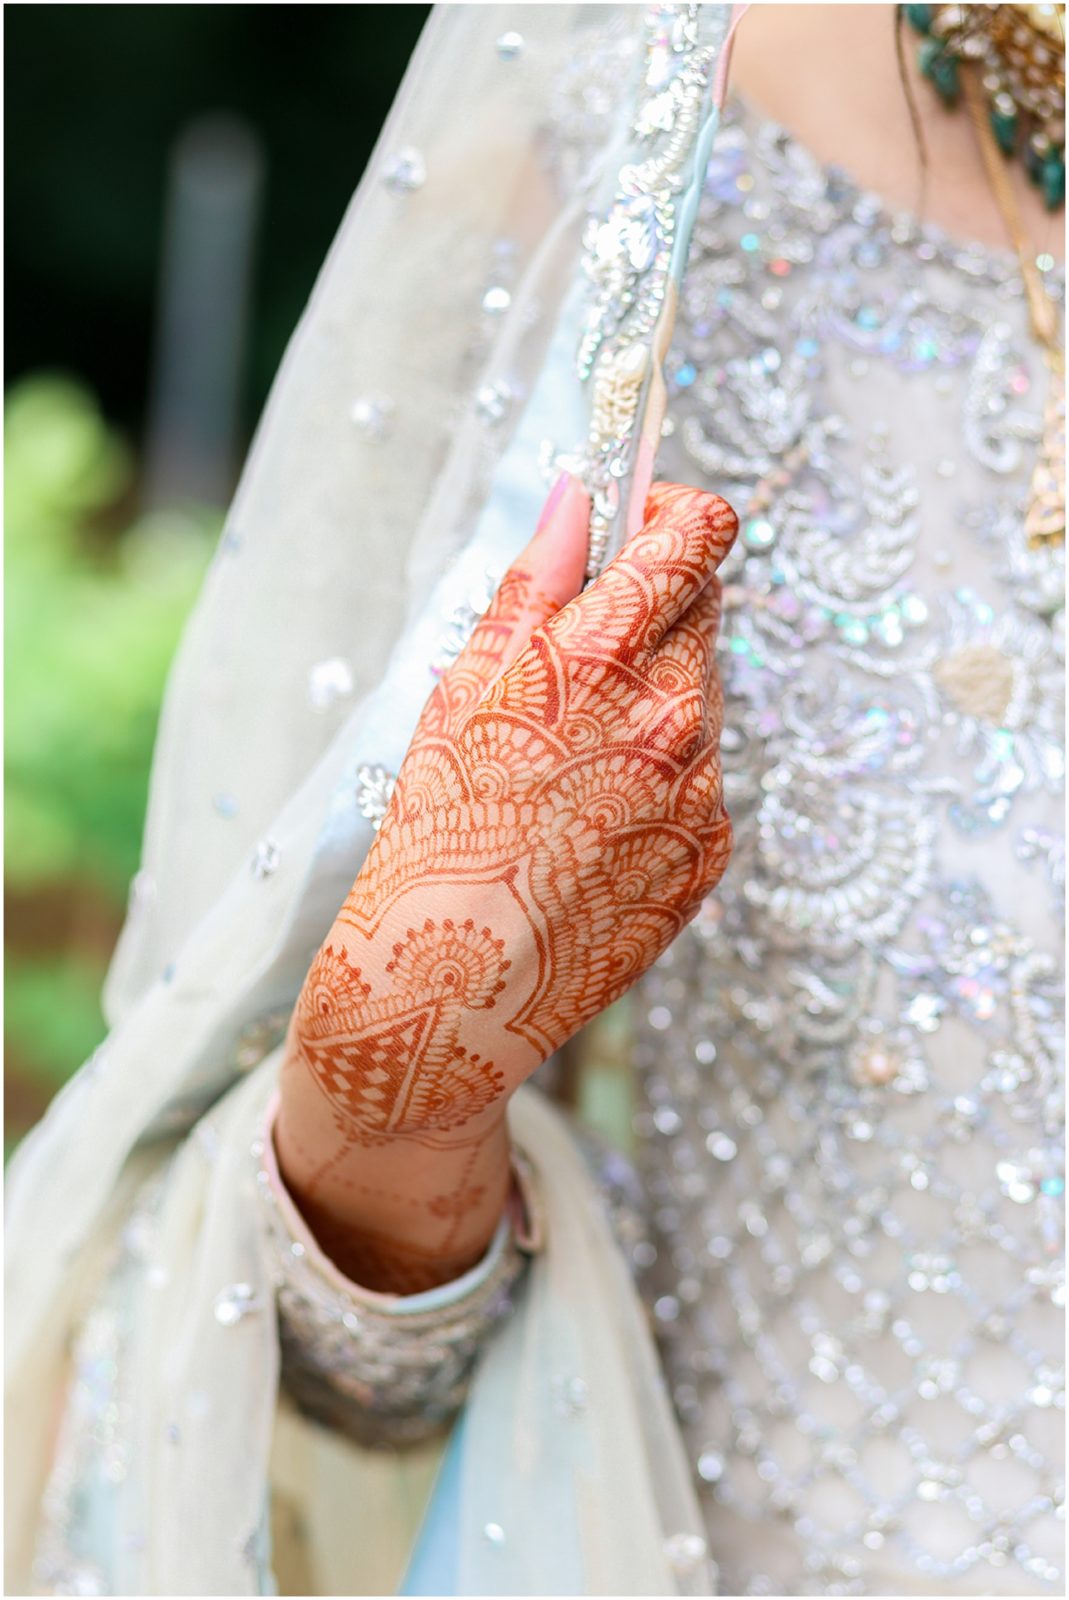 hennah on hands henna - Indian Pakistani Punjabi Wedding Ceremony Nikkah - St. Louis Missouri - STL - Kansas City based Wedding Photographer - Four Seasons Wedding - Hennah Party - Islamic Wedding Ceremony - Mariam and Amaad's Intimate Backyard Wedding 